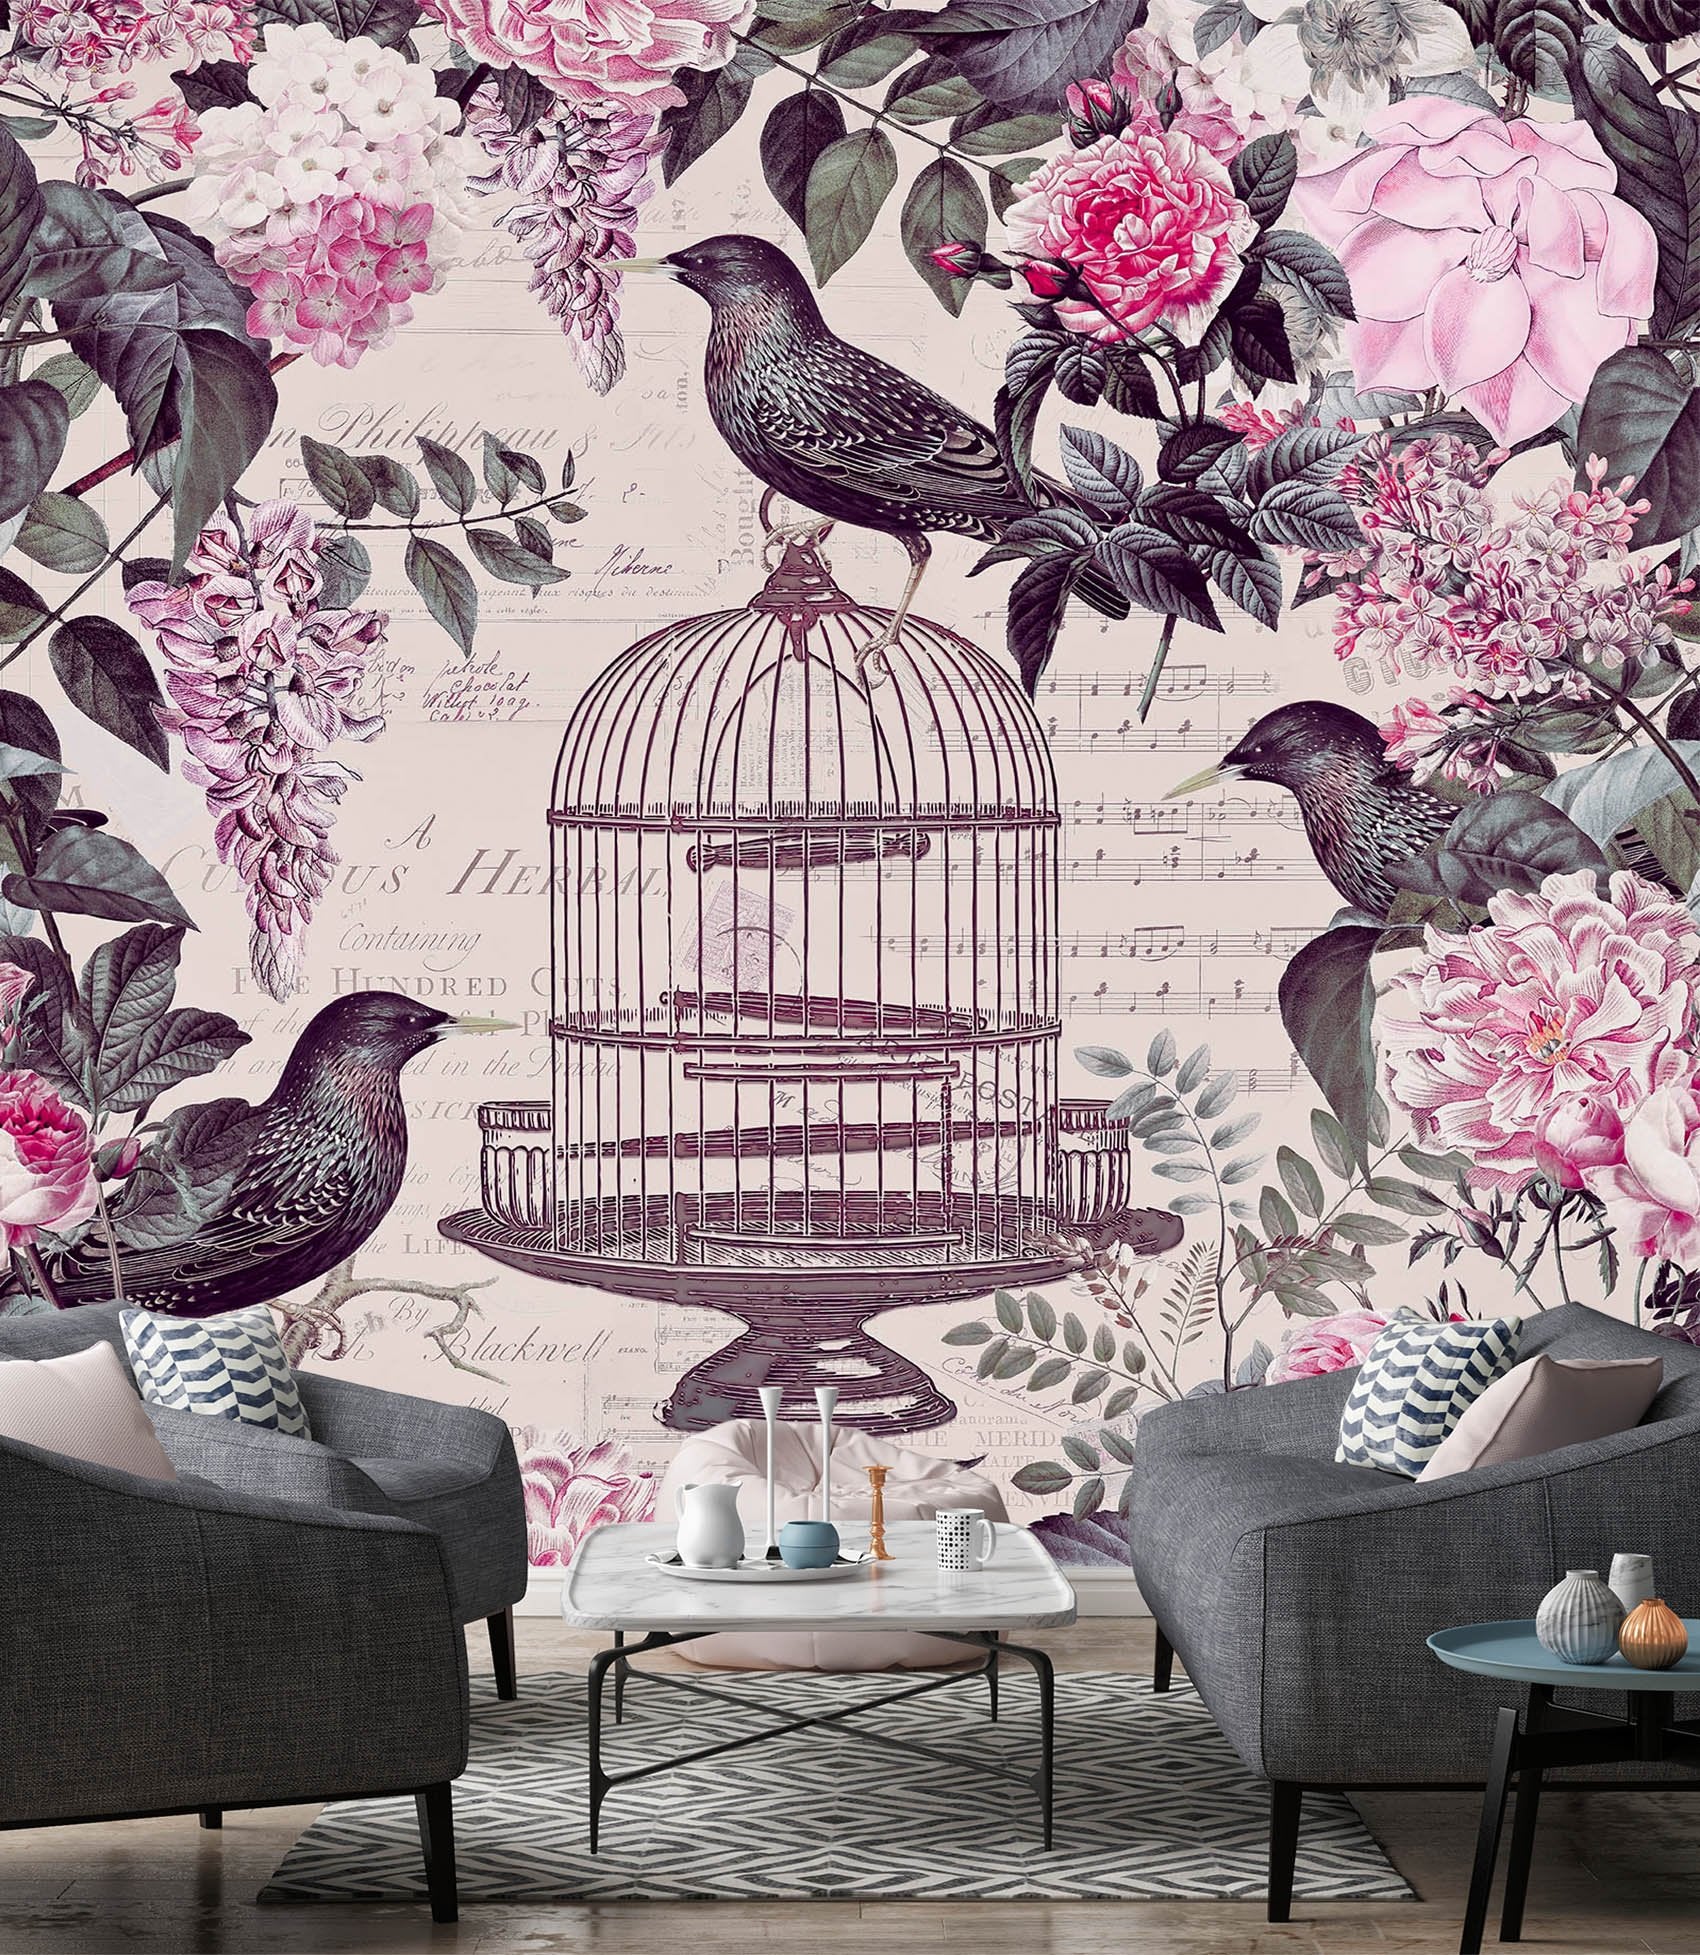 3D Birdcage And Flowers 1439 Andrea haase Wall Mural Wall Murals Wallpaper AJ Wallpaper 